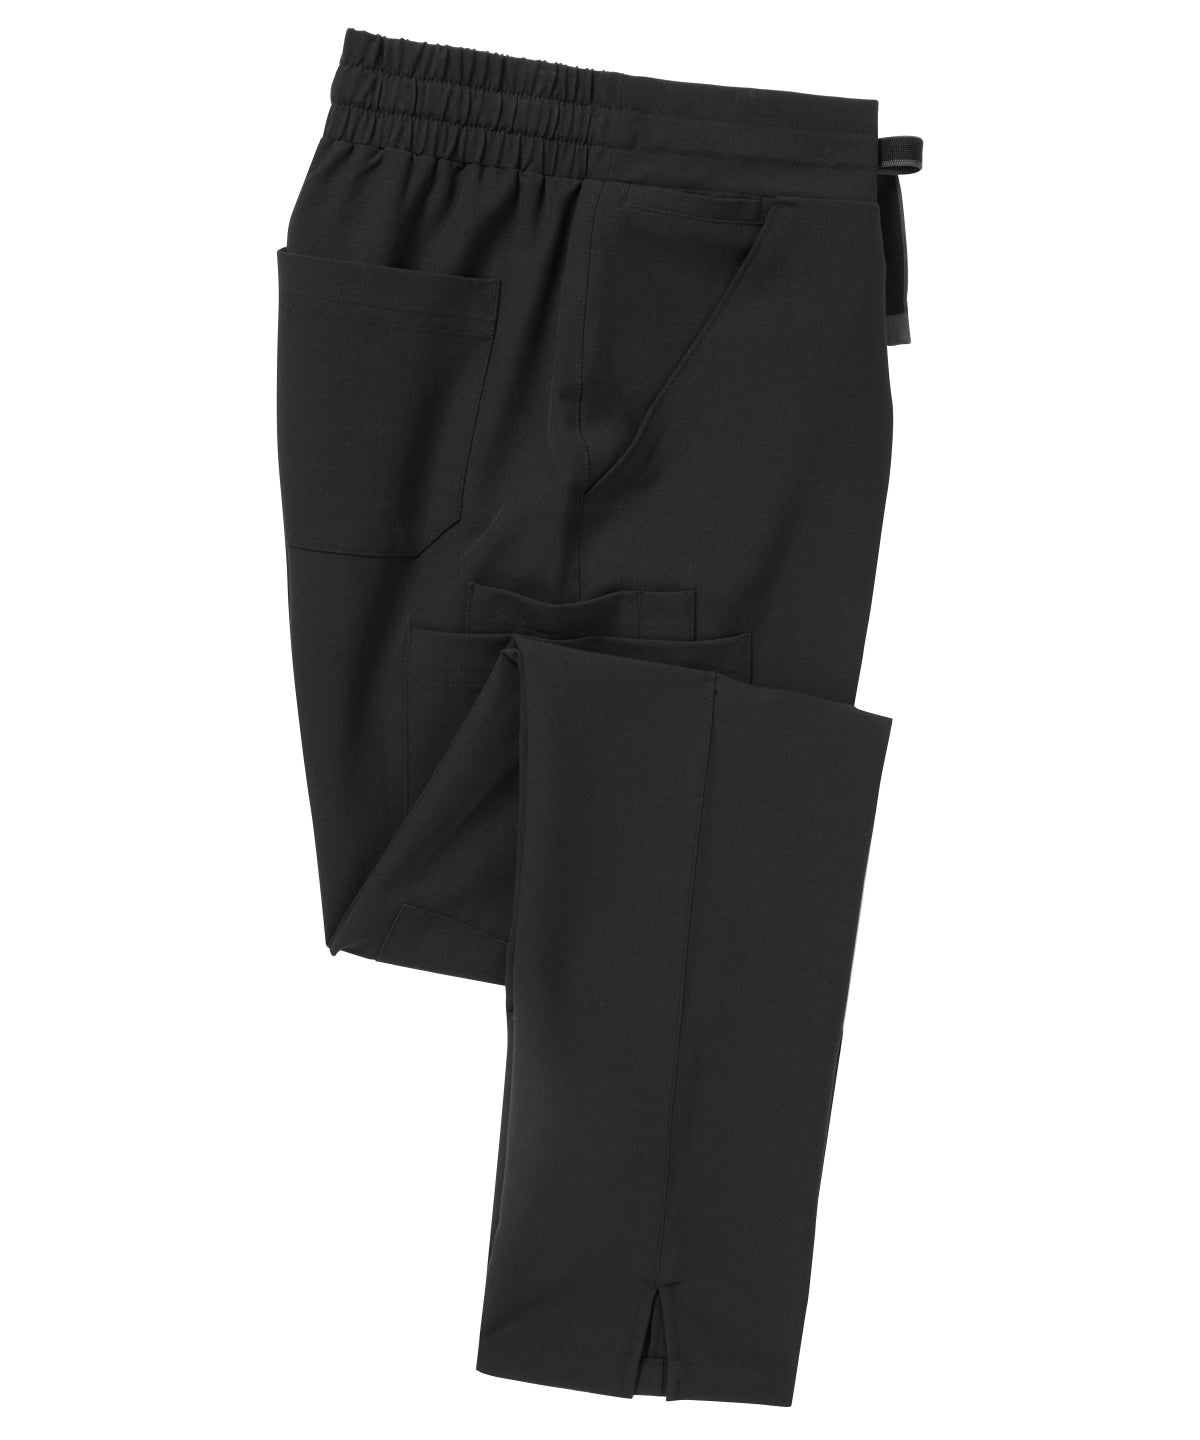 Onna by Premier Women’s 'Relentless' Onna-stretch cargo pants